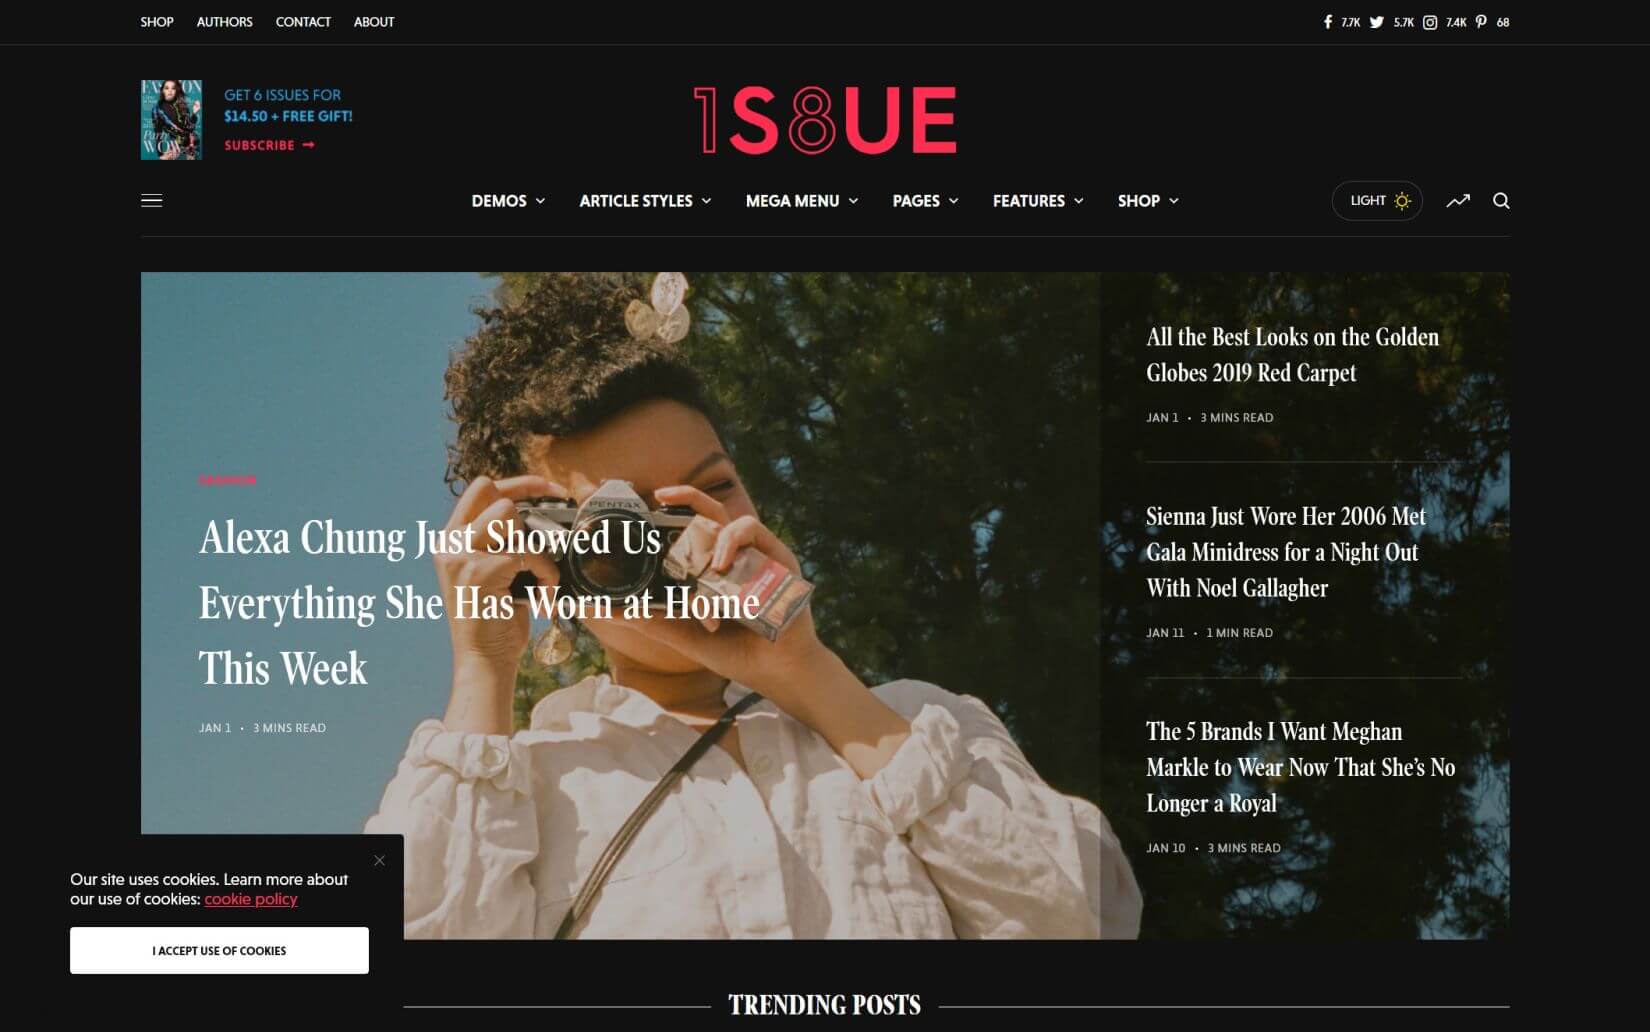 The Issue A Versatile Magazine WordPress Theme